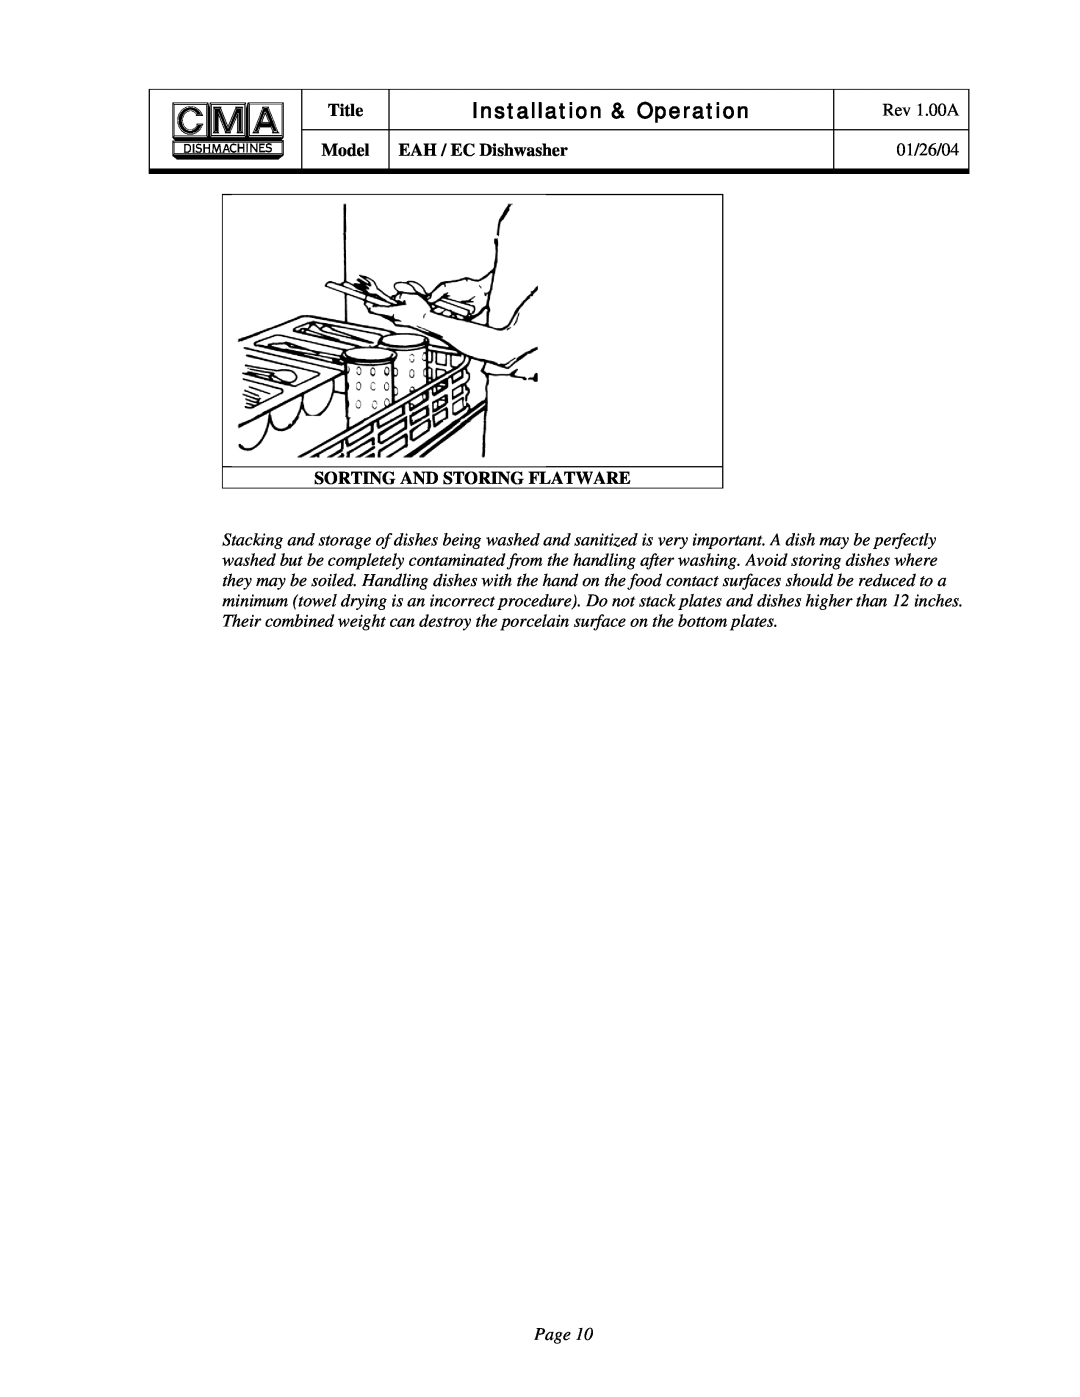 CMA Dishmachines EAH/EC owner manual Installation & Operation, Title, Rev 1.00A, Model, EAH / EC Dishwasher, 01/26/04 